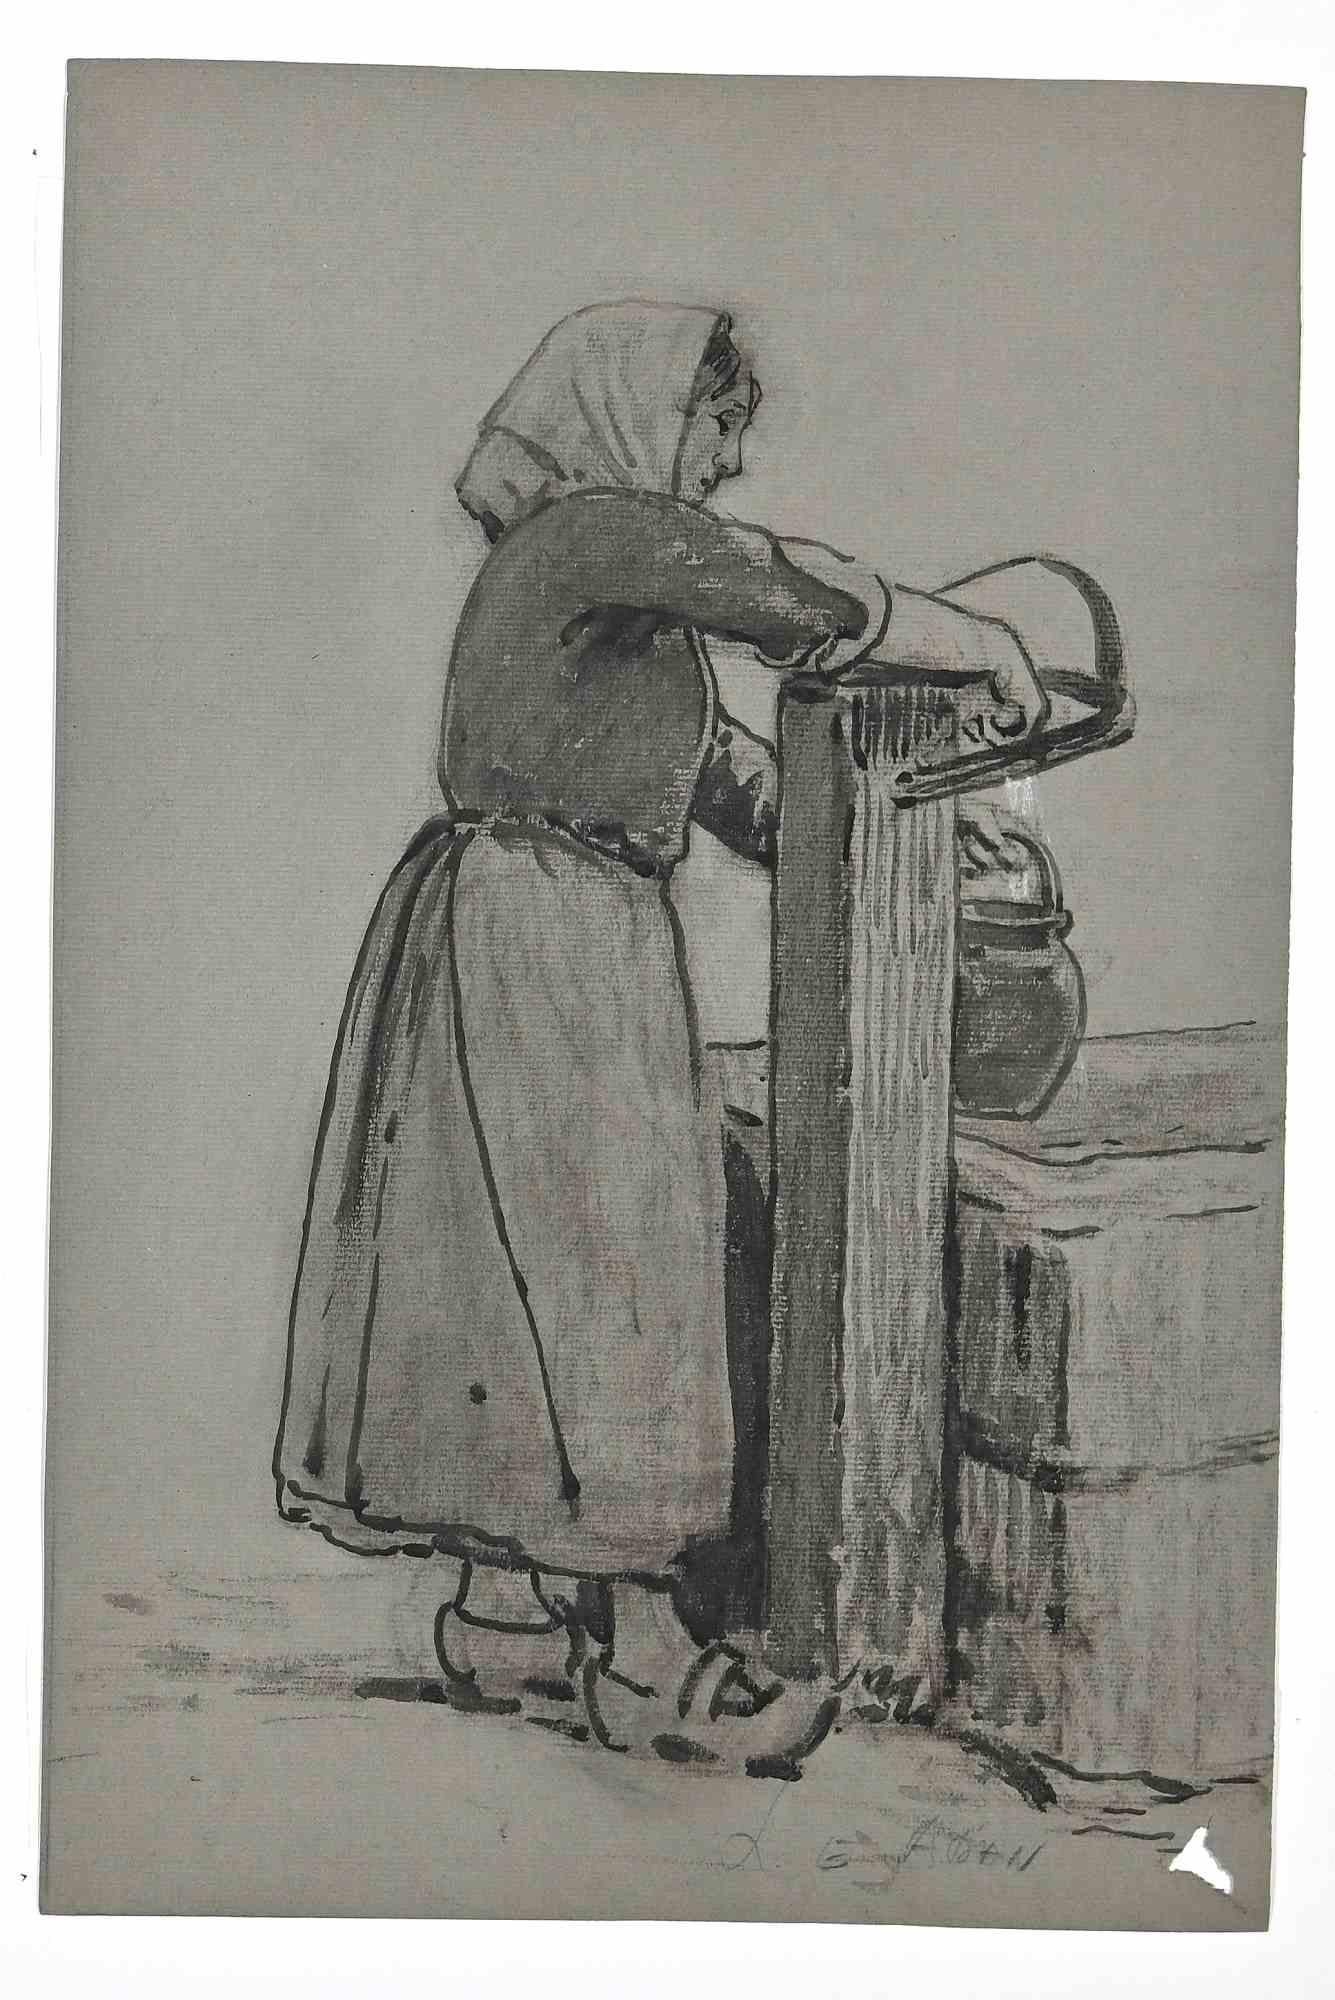 Woman - Original Drawing by L.E. Adan - Early 20th Century